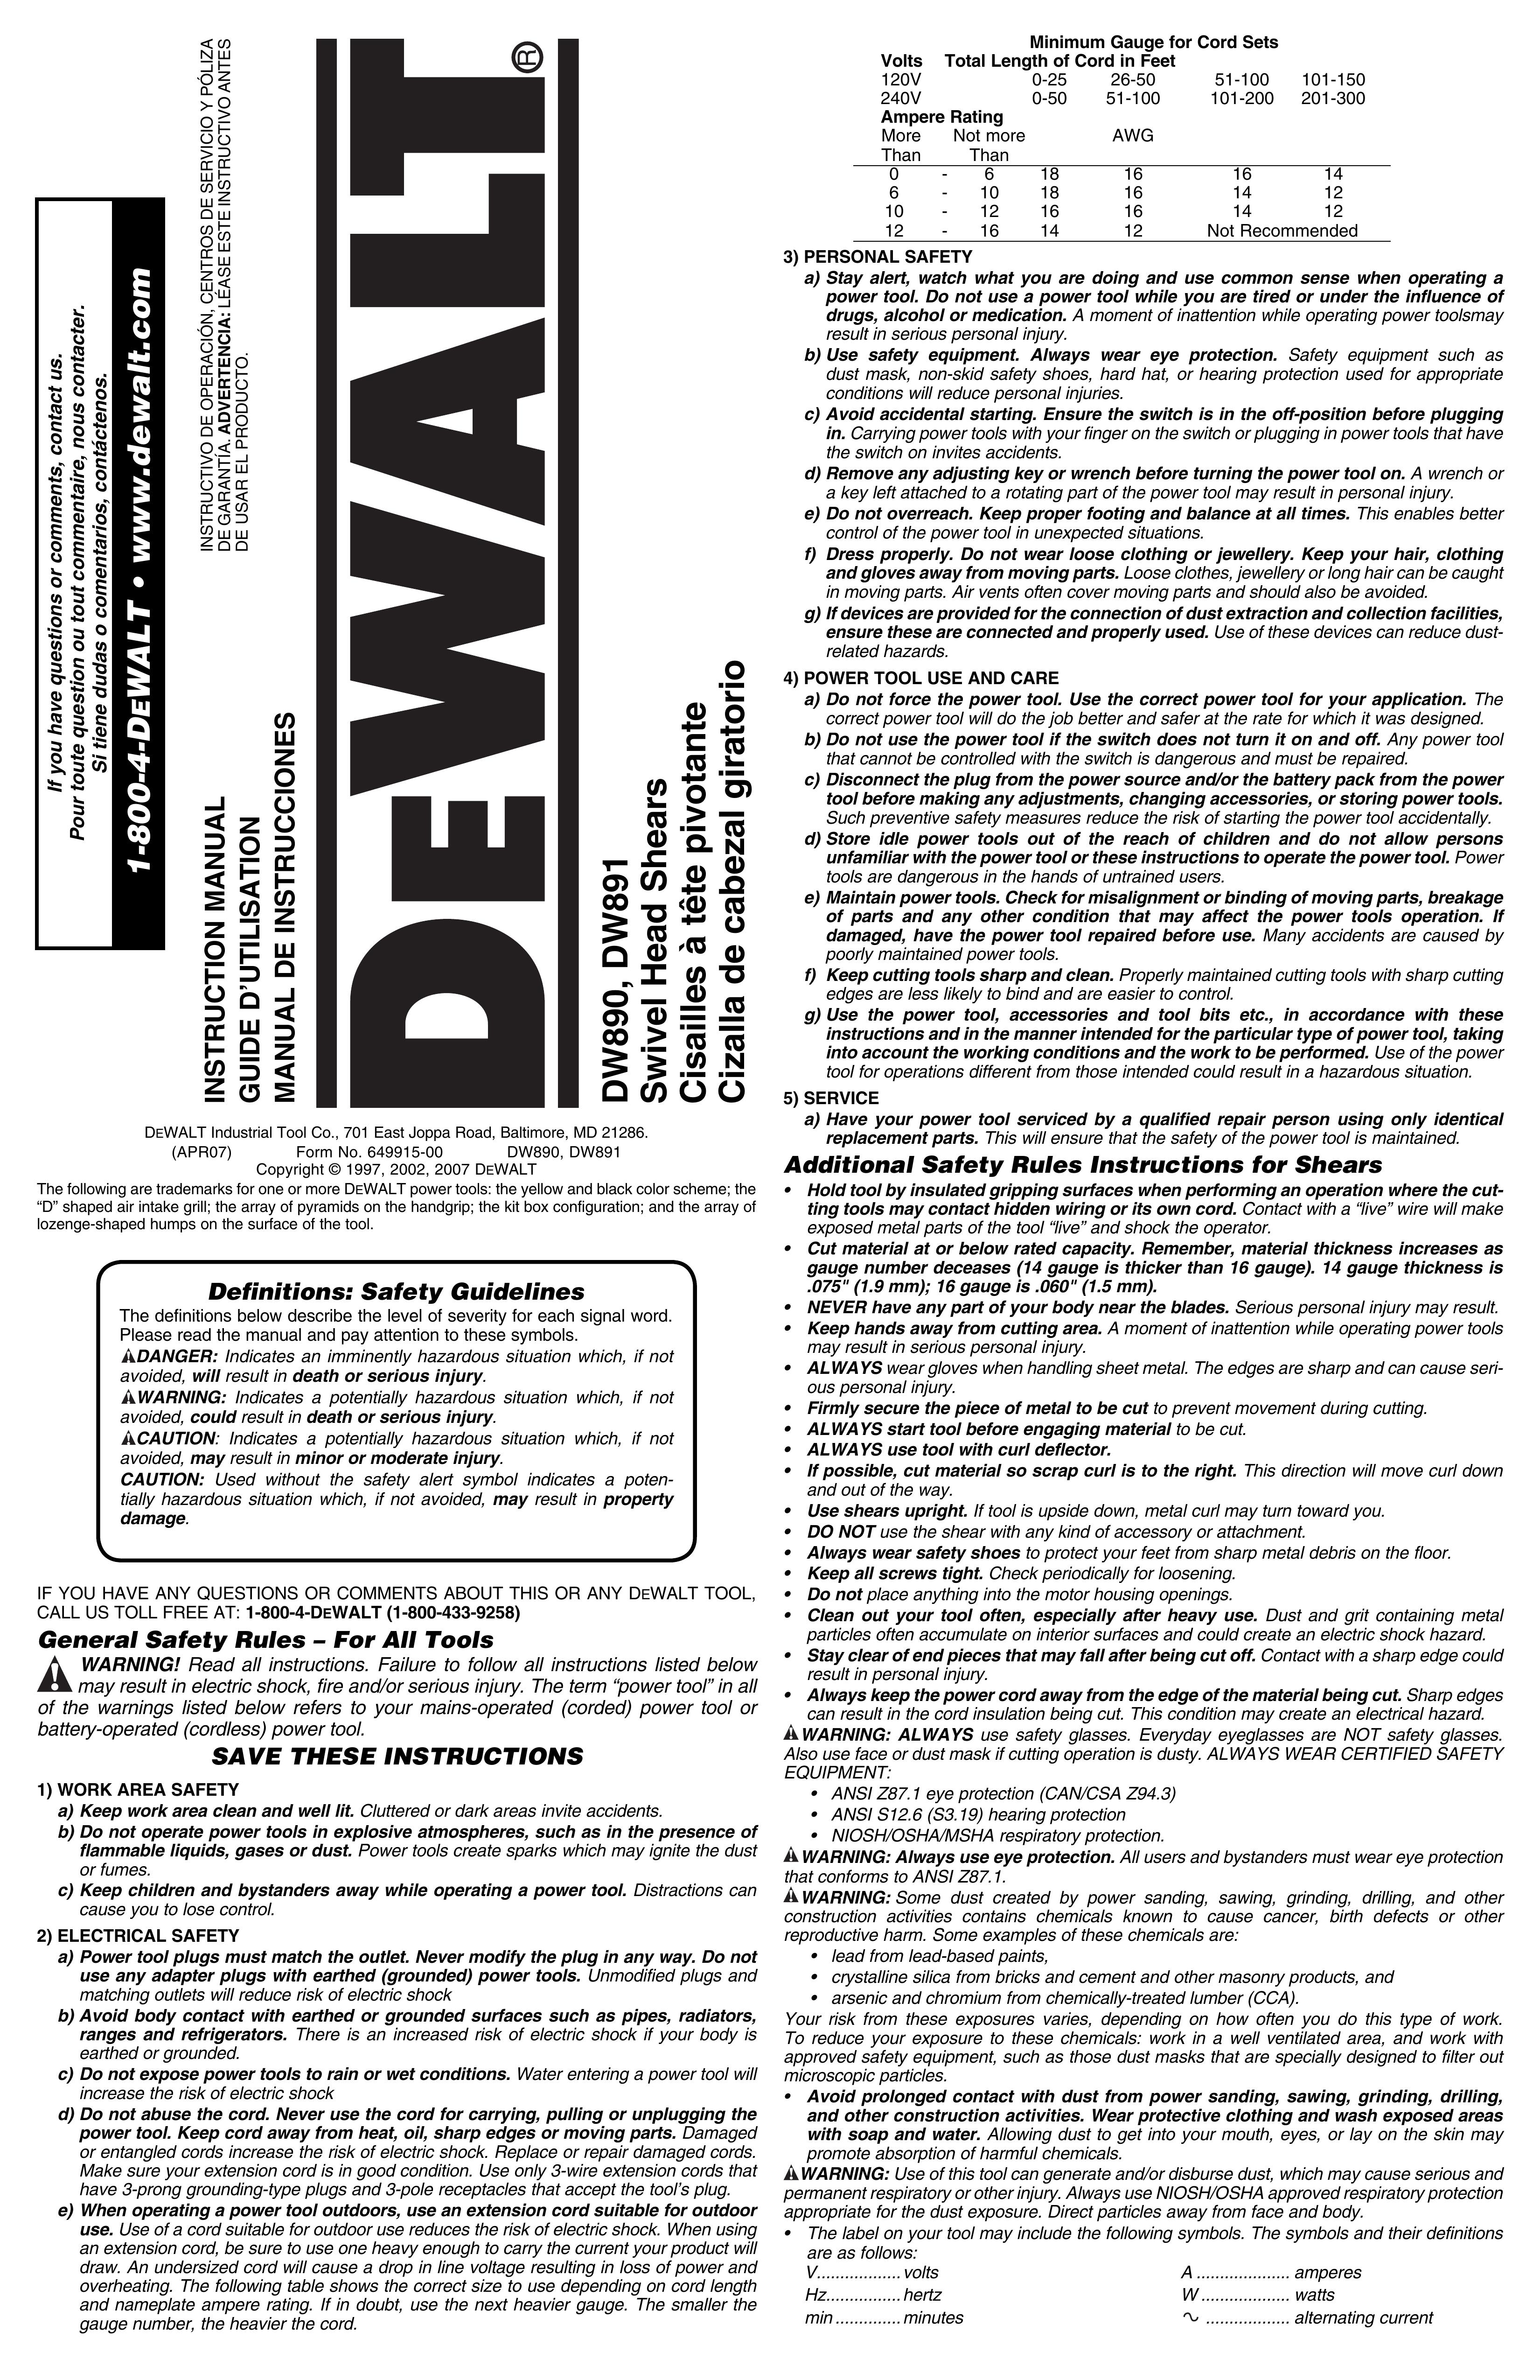 DeWalt DW890 Trimmer User Manual